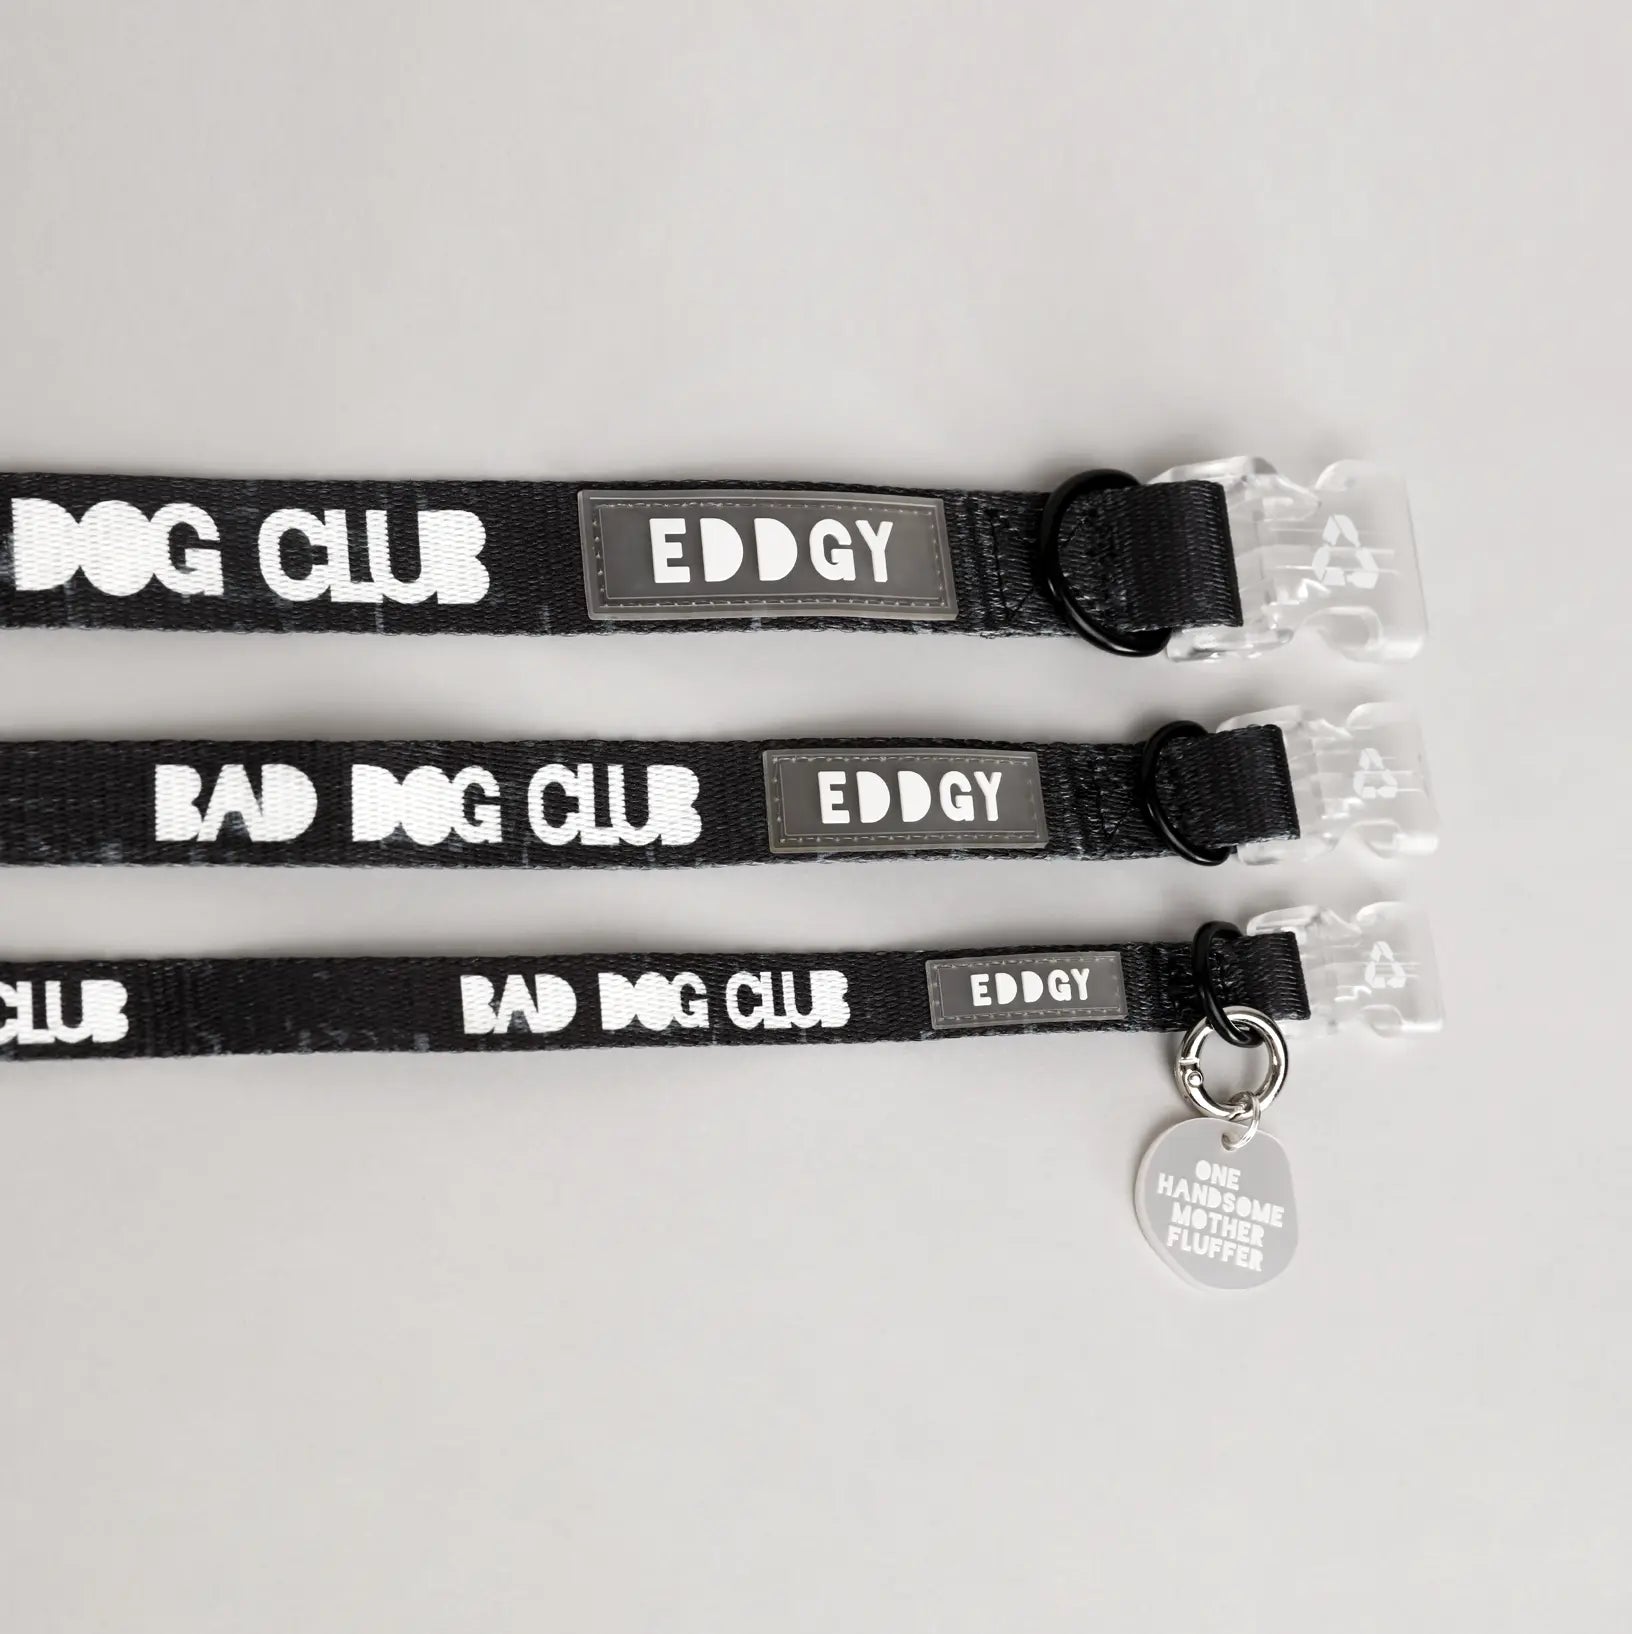 Bad Dog Club Collar EDDGY